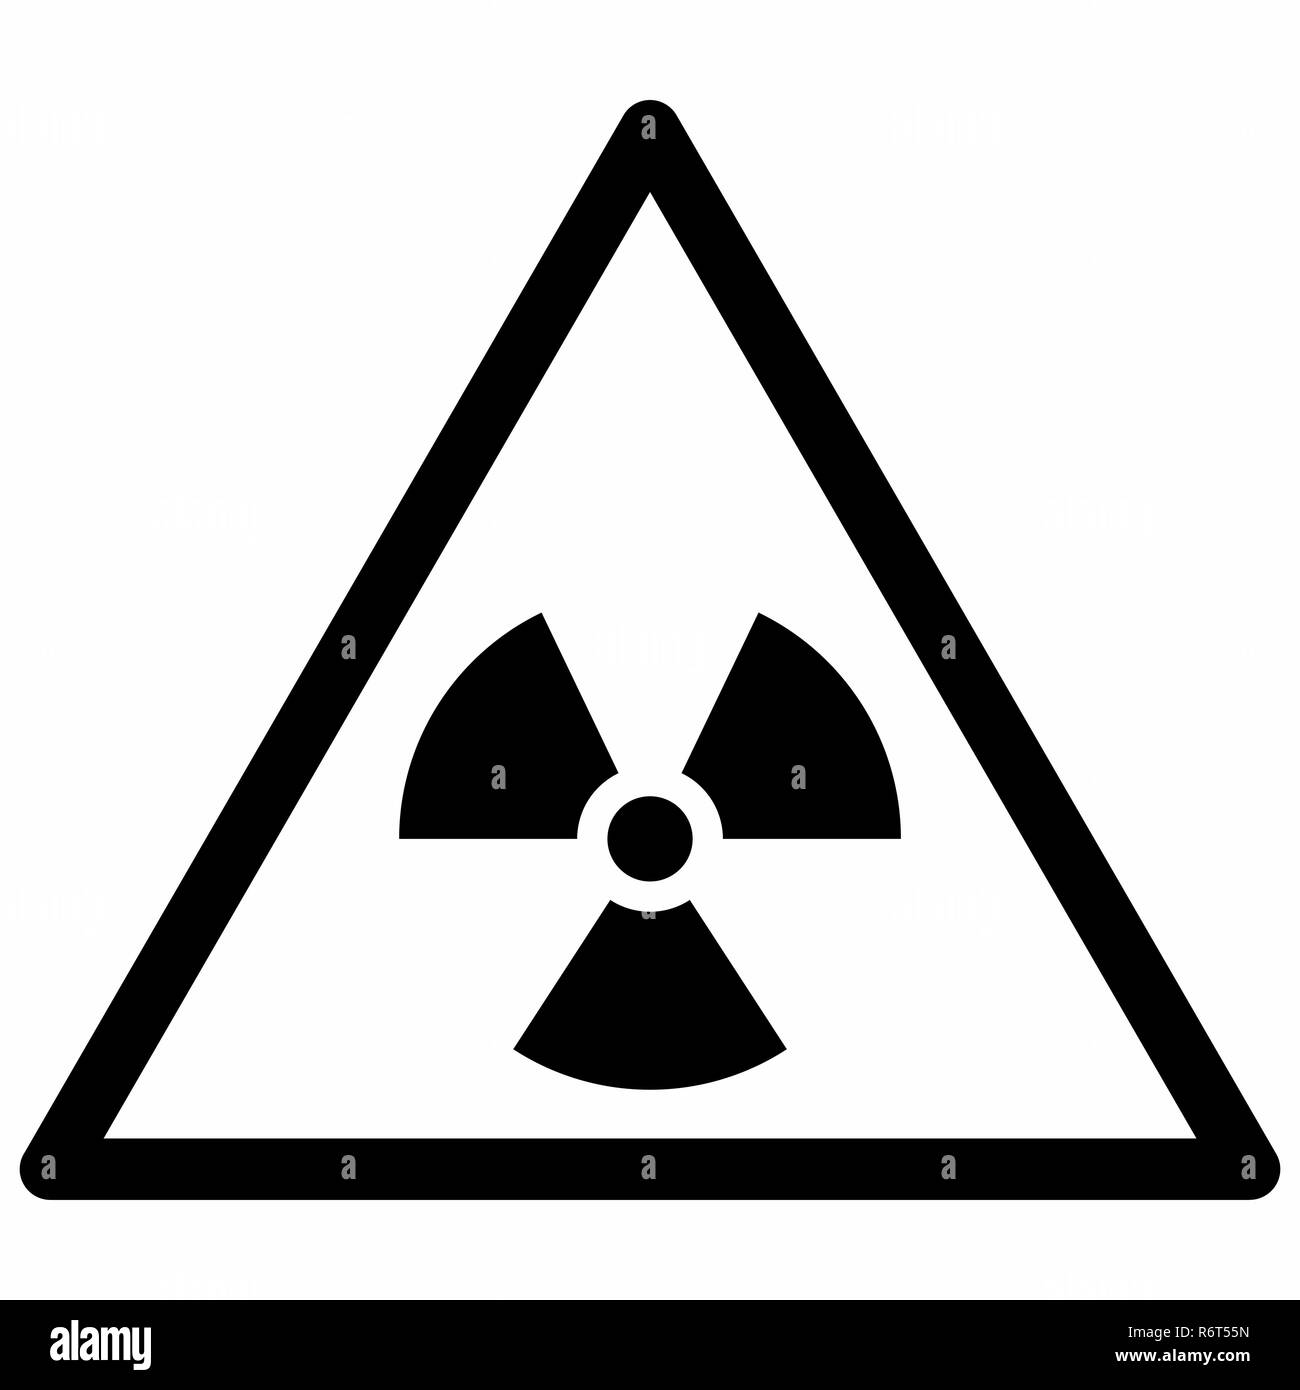 Illustration of an isolated radiation hazard symbol Stock Vector